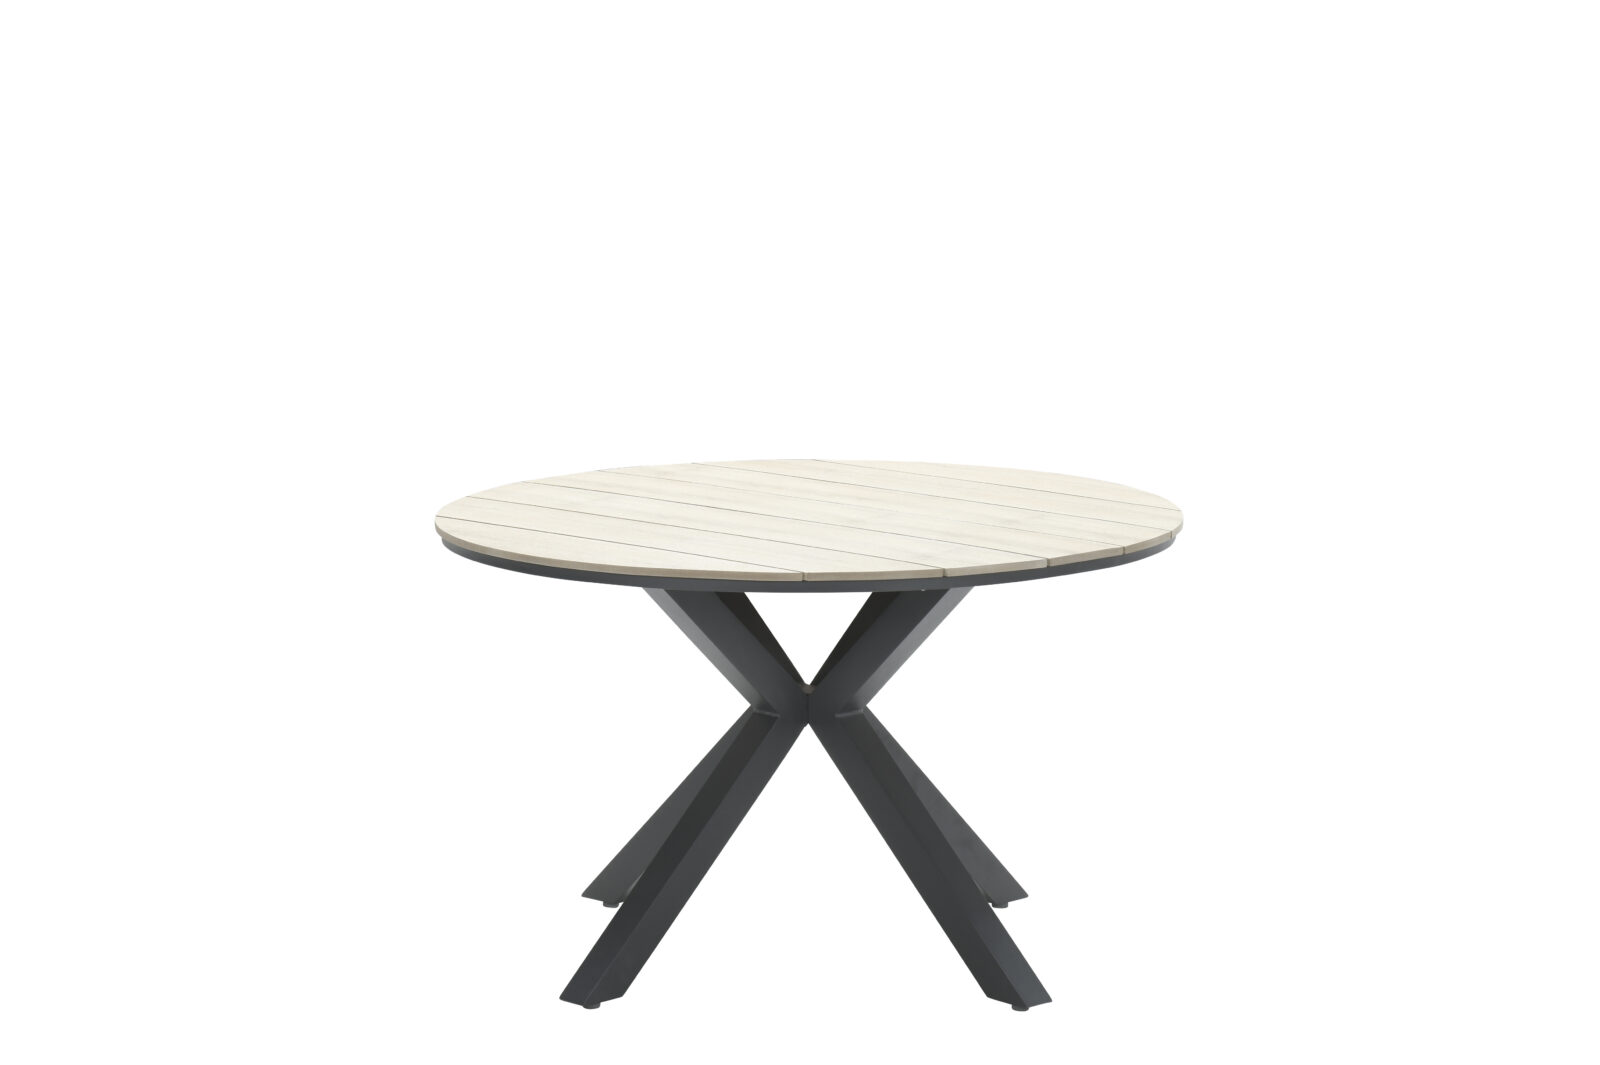 Edison tafel Ø122 cm - carbon black/ light teak polywood 21642NF 2 5MB scaled